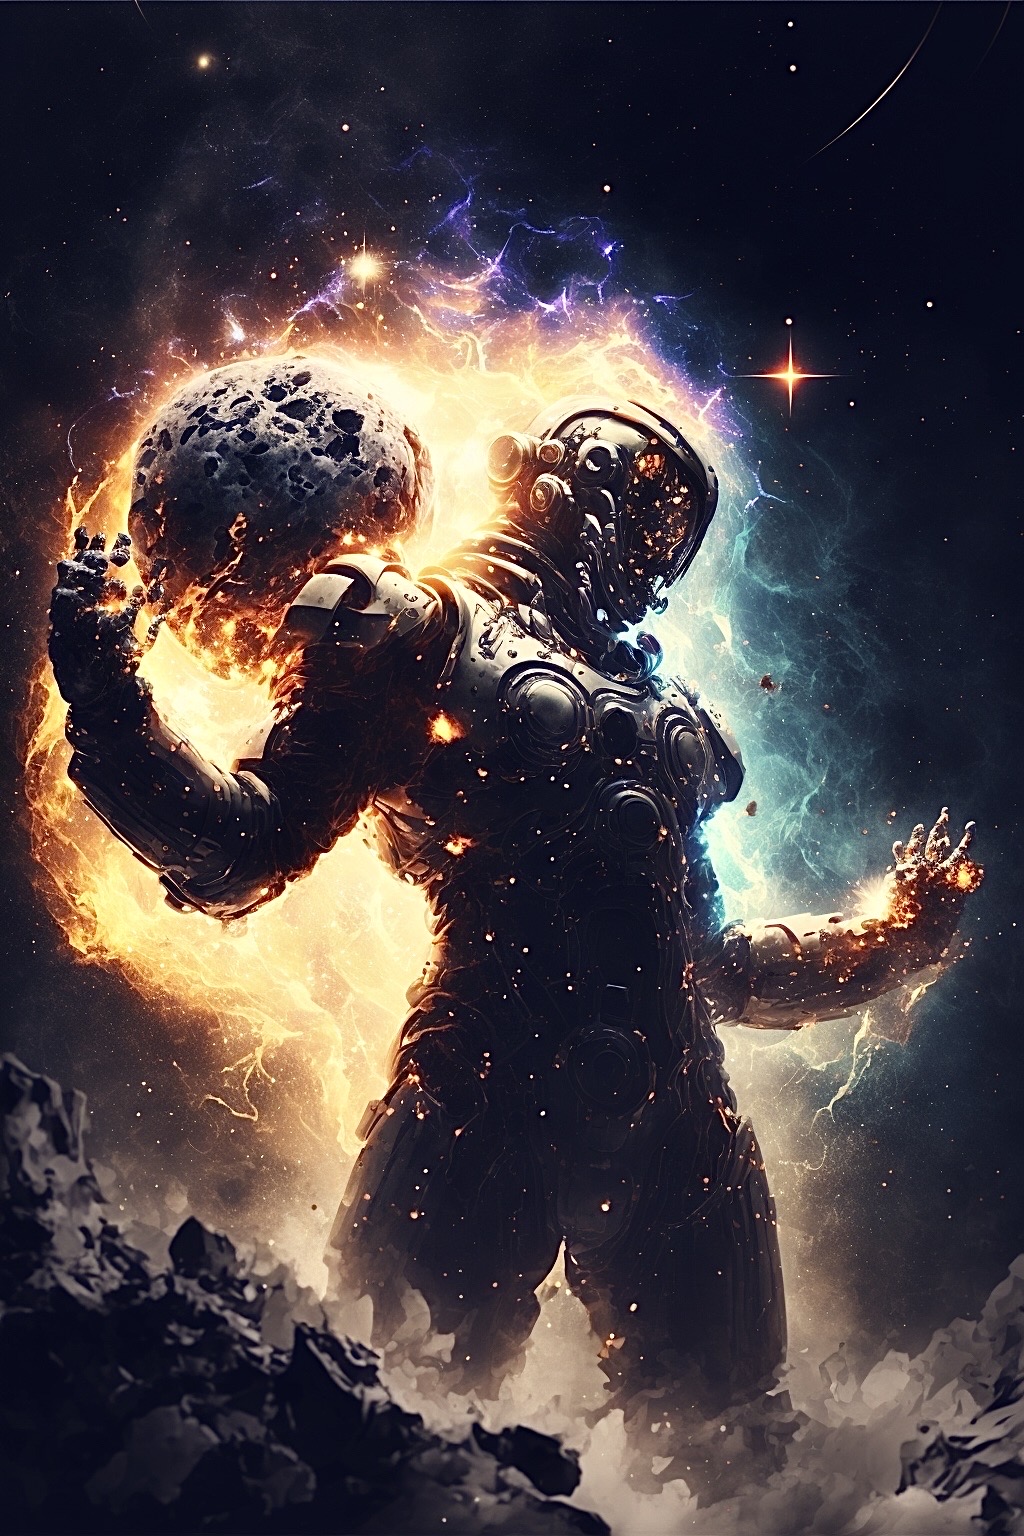 Giant celestial god by ExnergyX on DeviantArt